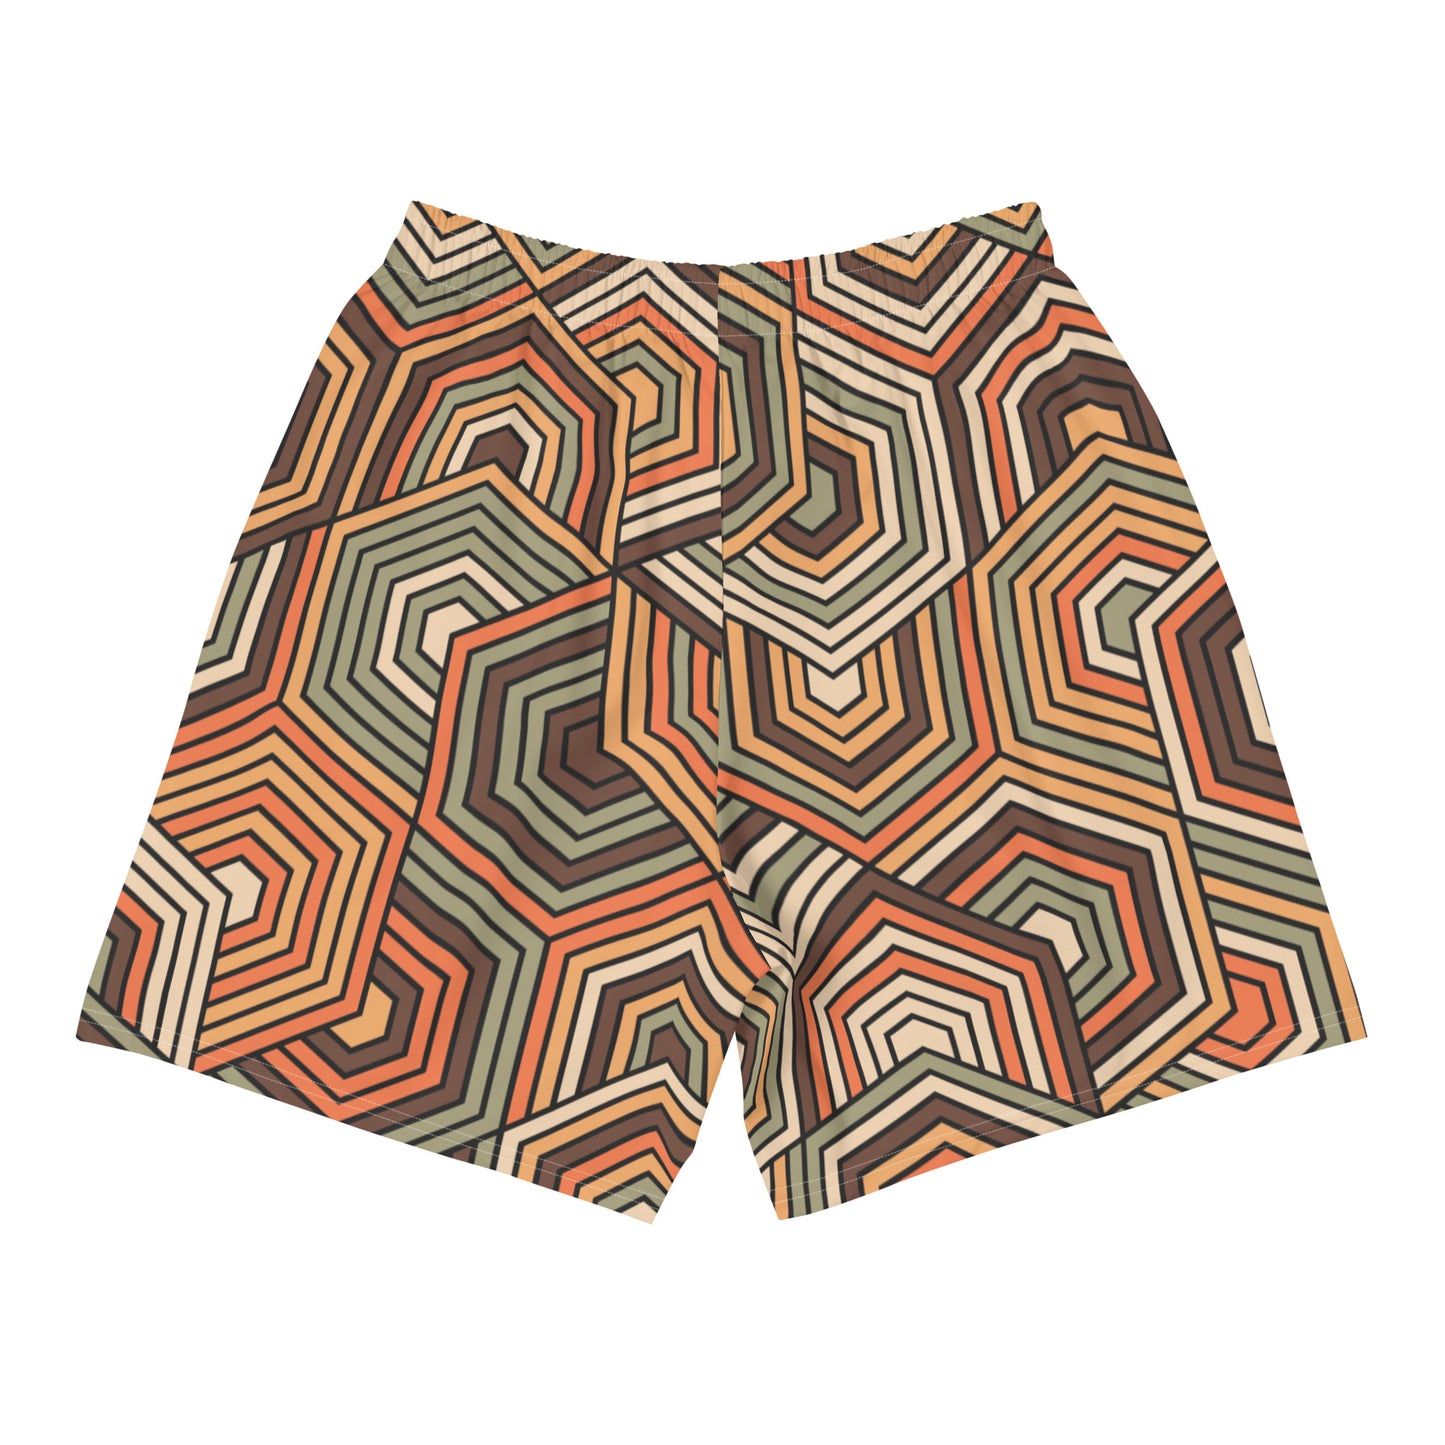 Hexagonal Pattern - Sustainably Made Men's Short